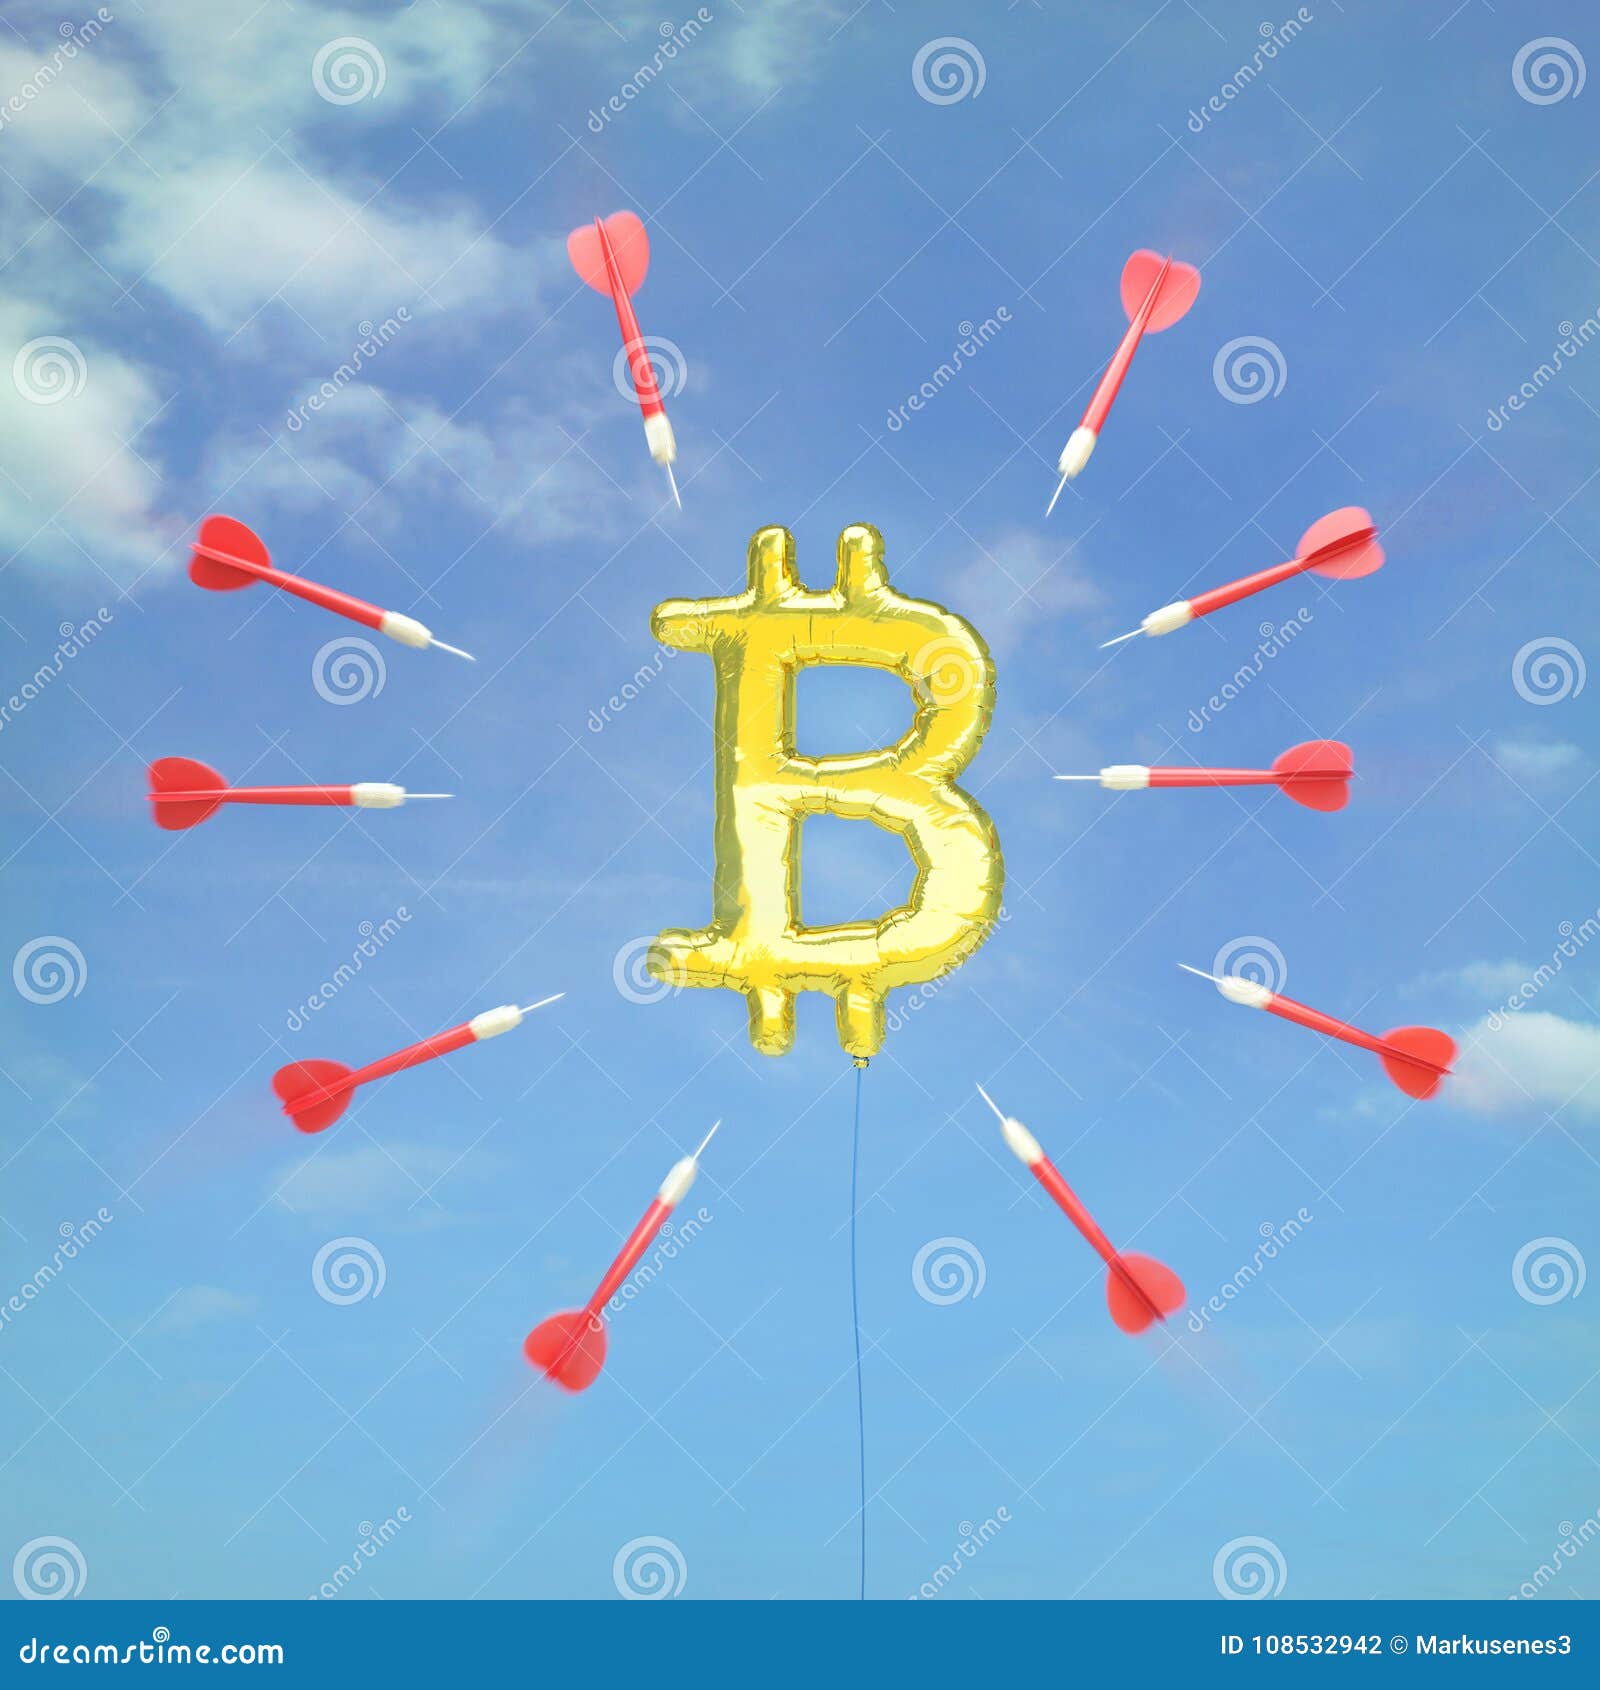 When will the bitcoin bubble burst quant forex trading